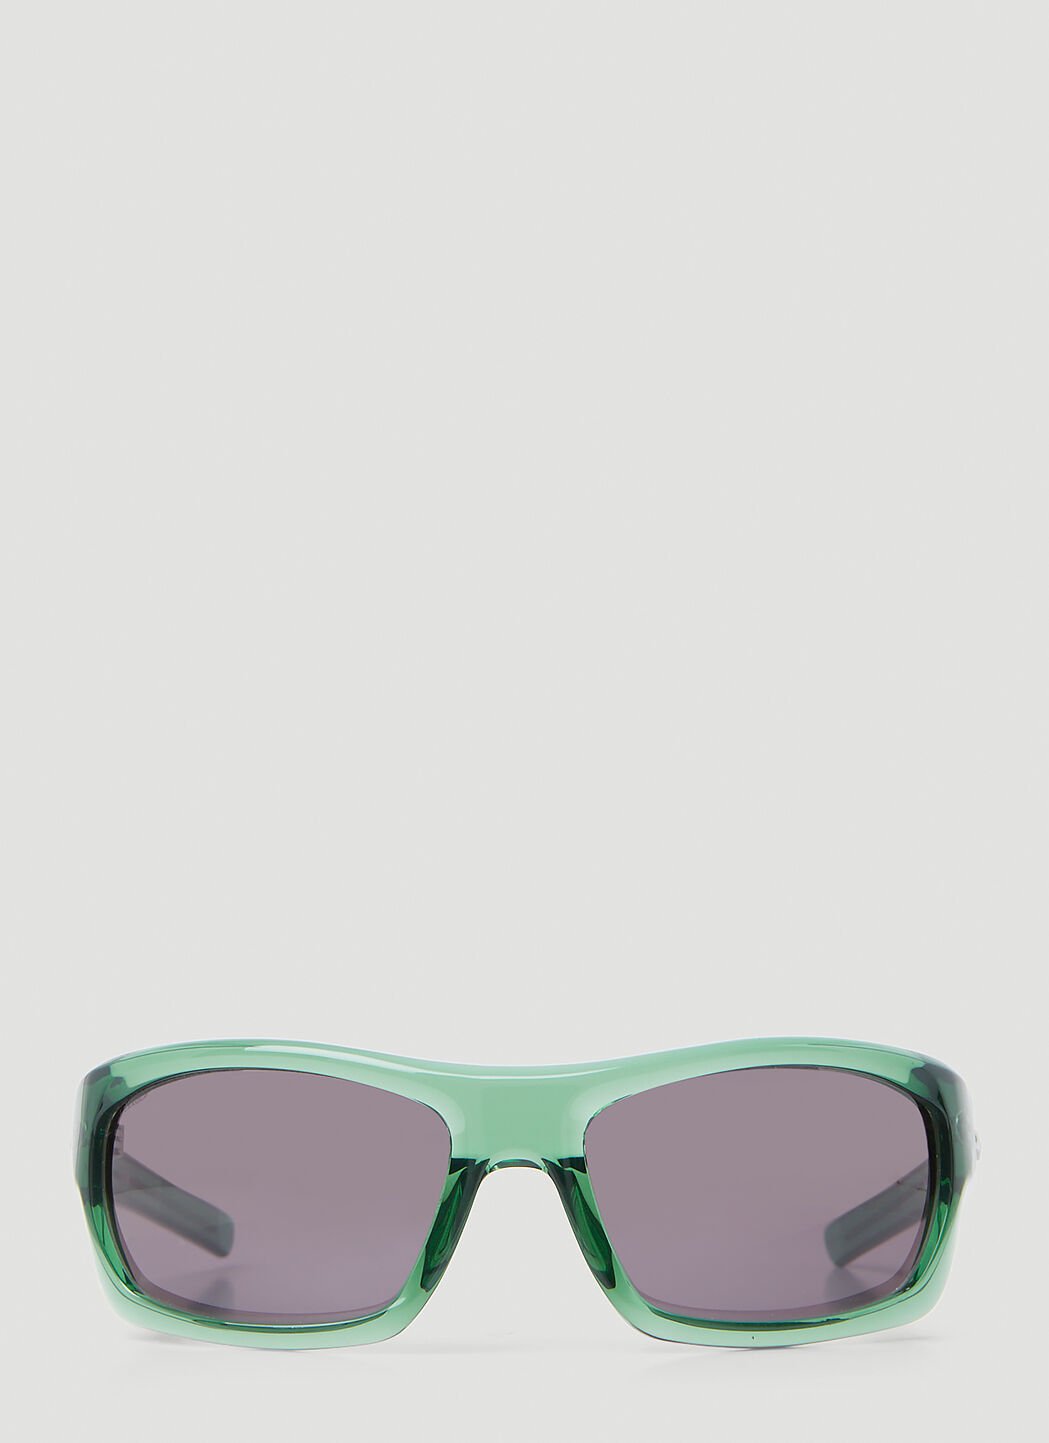 Lexxola Neo Sunglasses 블랙 lxx0353006